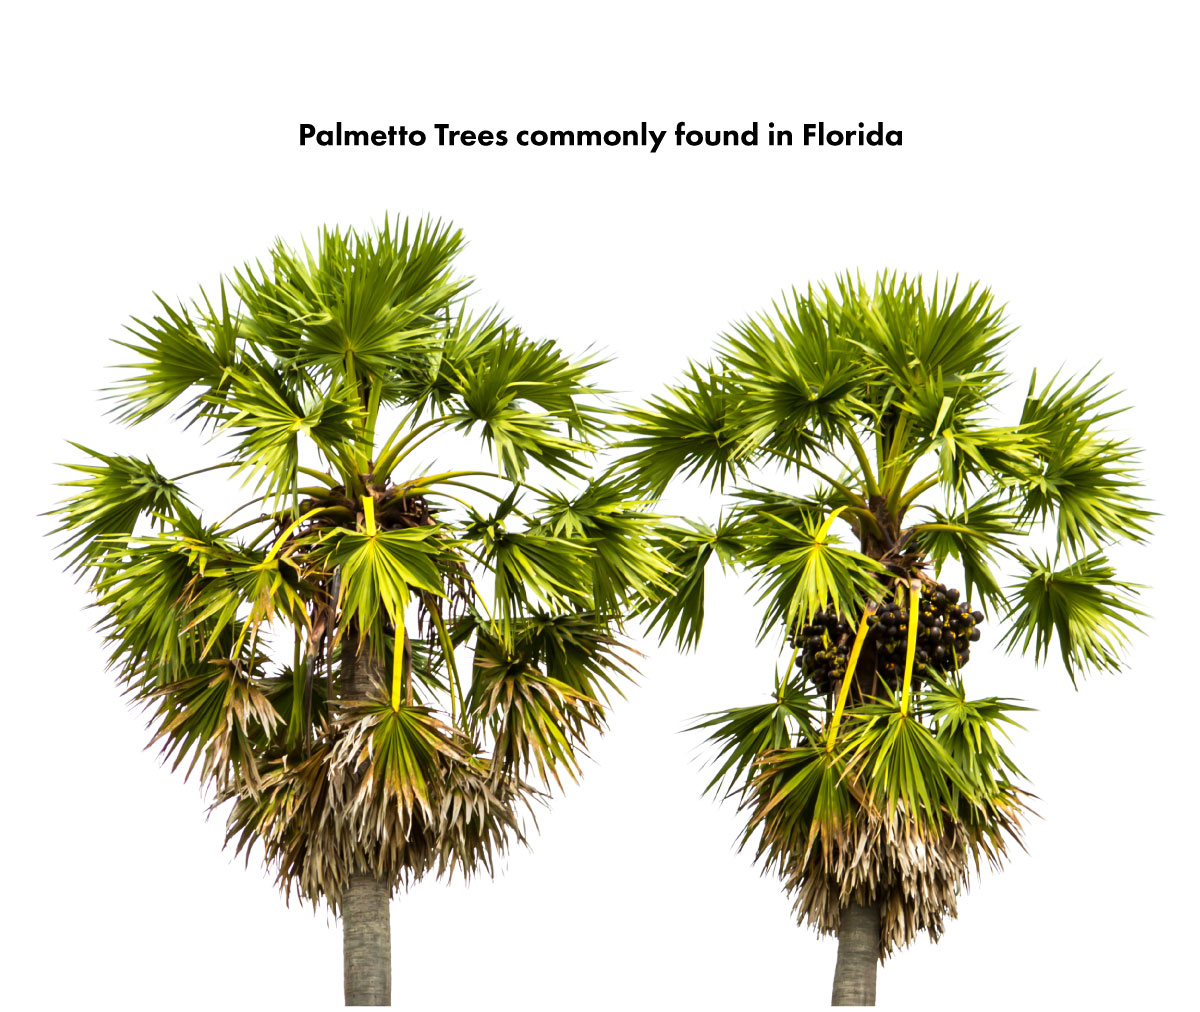 Palmetto Trees where palmetto bugs were commonly found. 